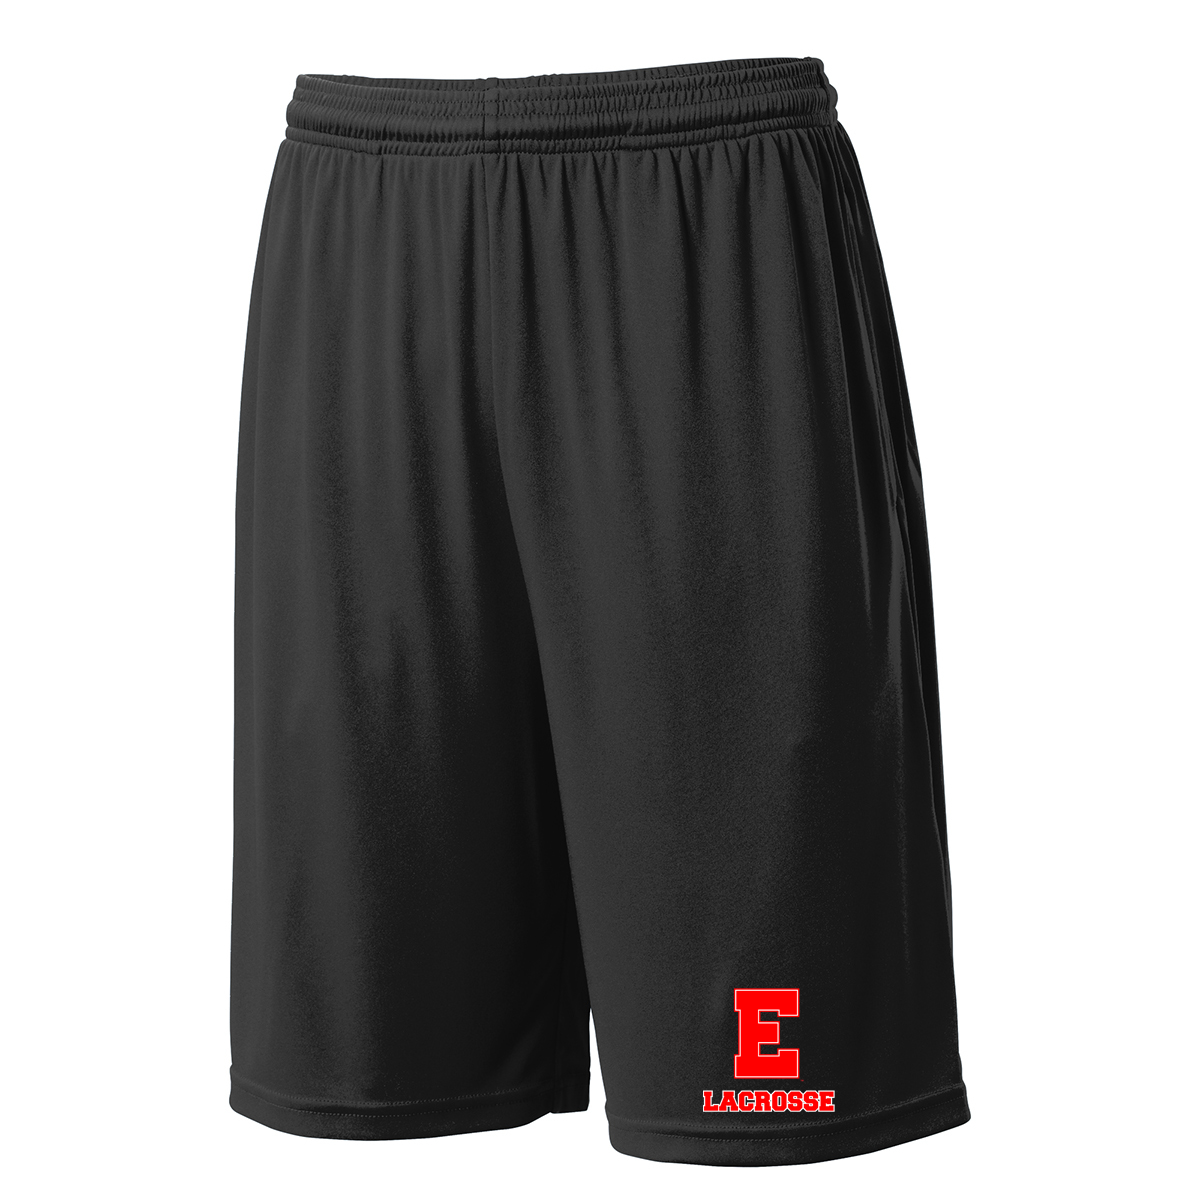 East Lacrosse Shorts